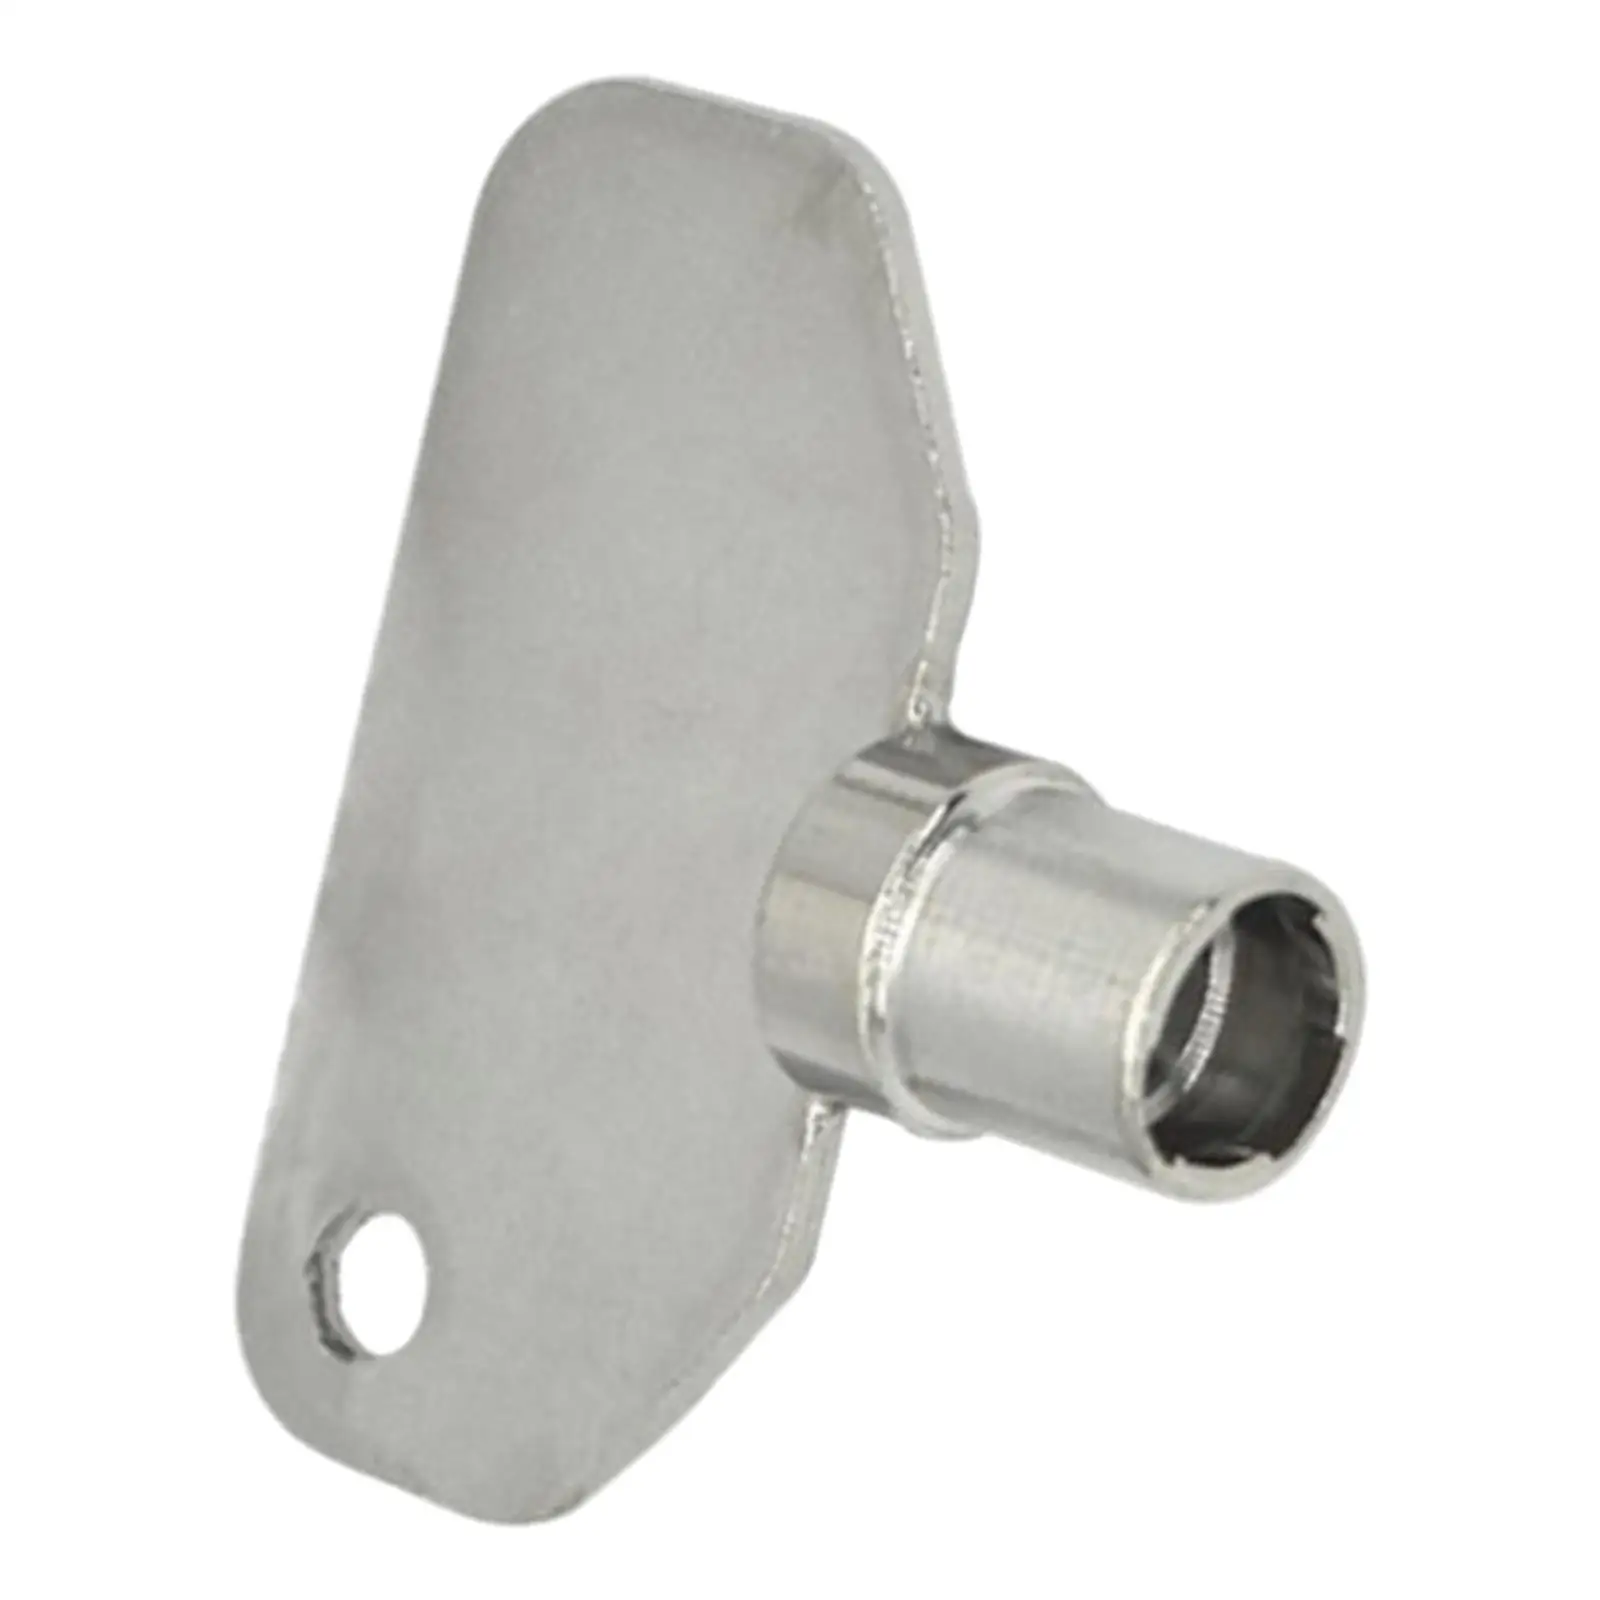 2x5-1526-75 Barrel Key Tubular Key Hollow  for Rvs Motorhomes Zinc  Steel Antitheft Hardware Locking Devices